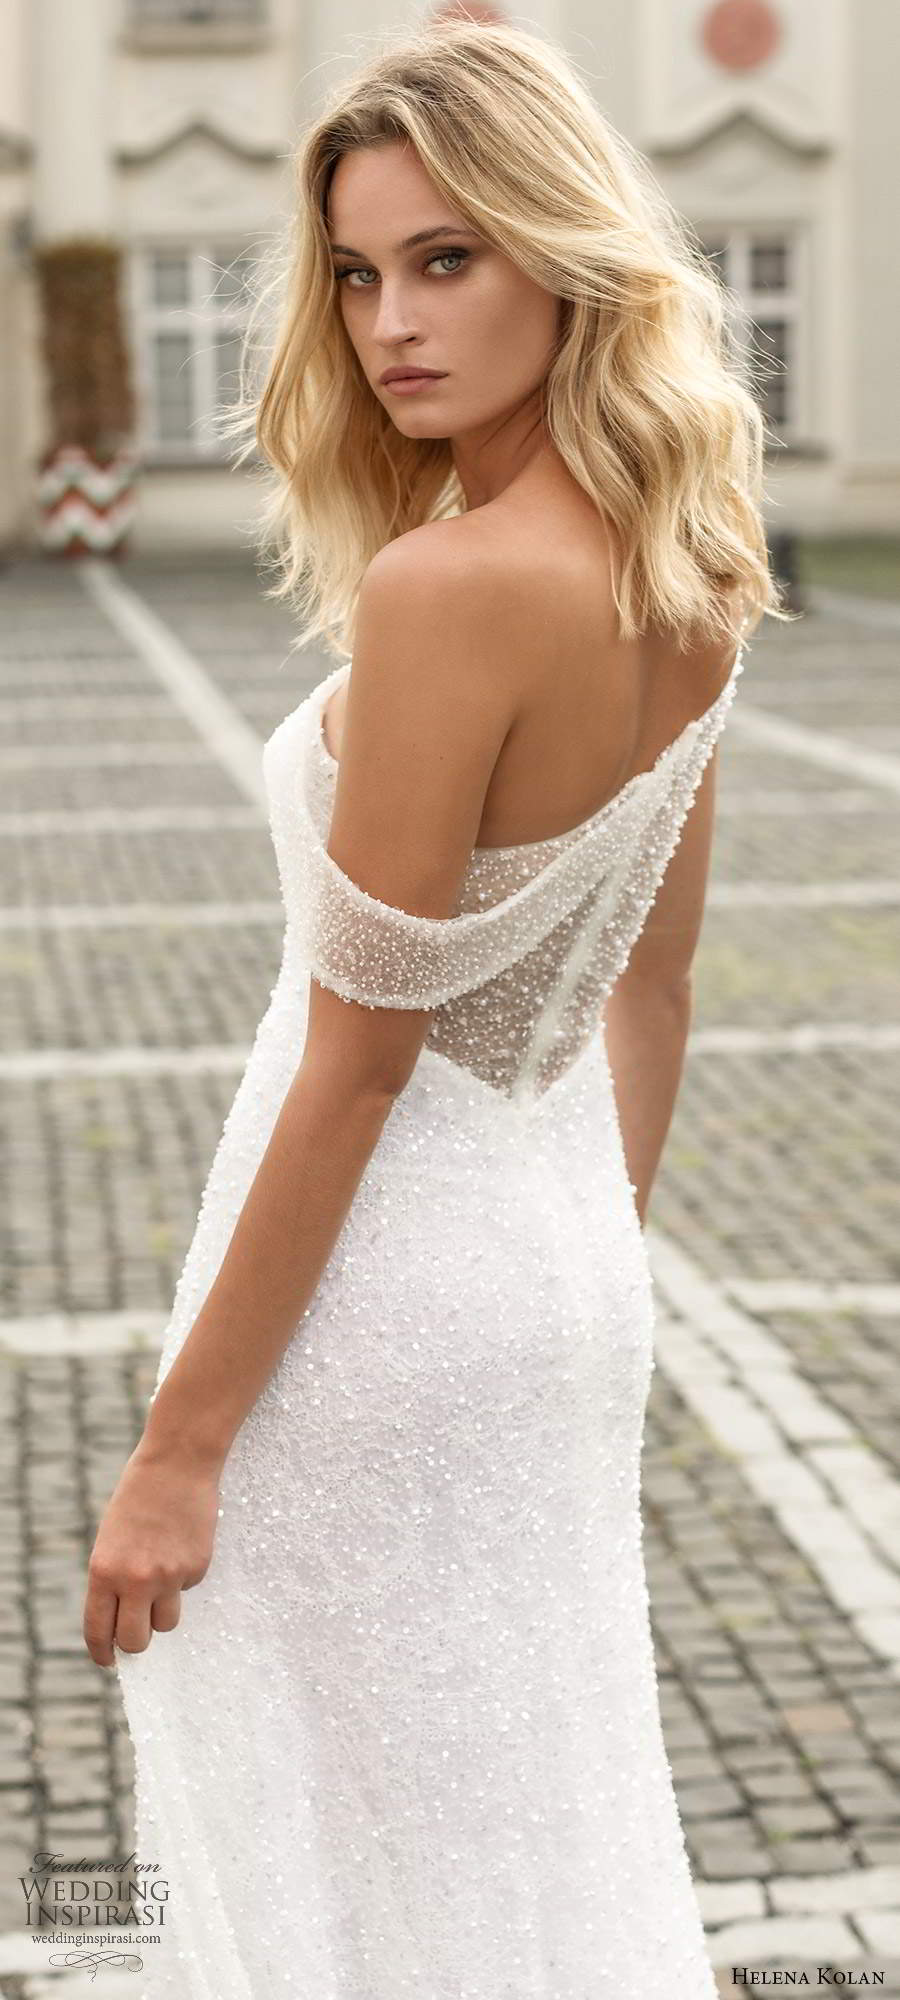 helena kolan 2020 bridal sleeveless one shoulder strap asmmetric neckline fully embellished glitzy a line ball gown wedding dress sweep train (6) zbv